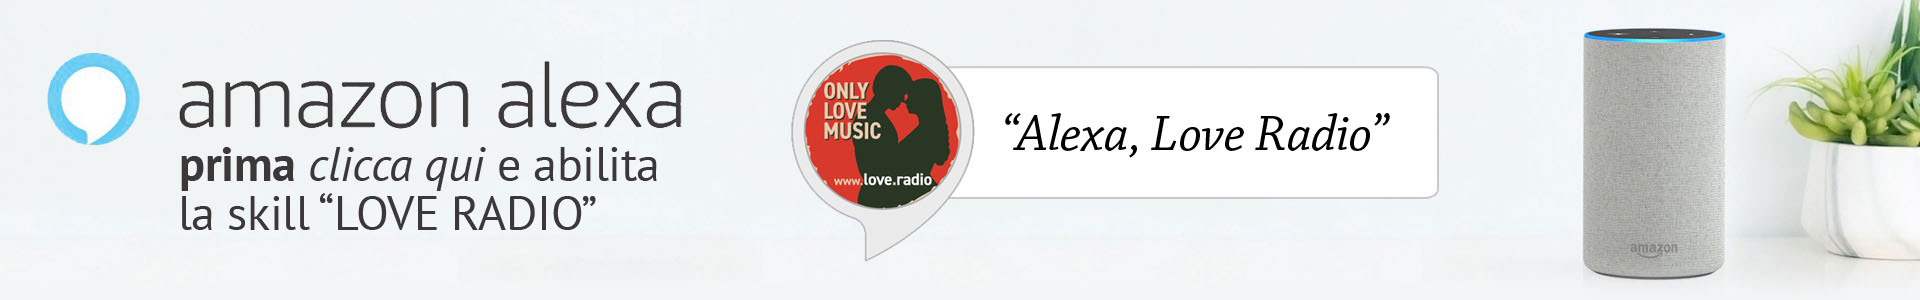 Love Radio Amazon Alexa in italiano, inglese, spagnolo, francese e tedesco per ascoltarci con qualsiasi dispositivo Alexa